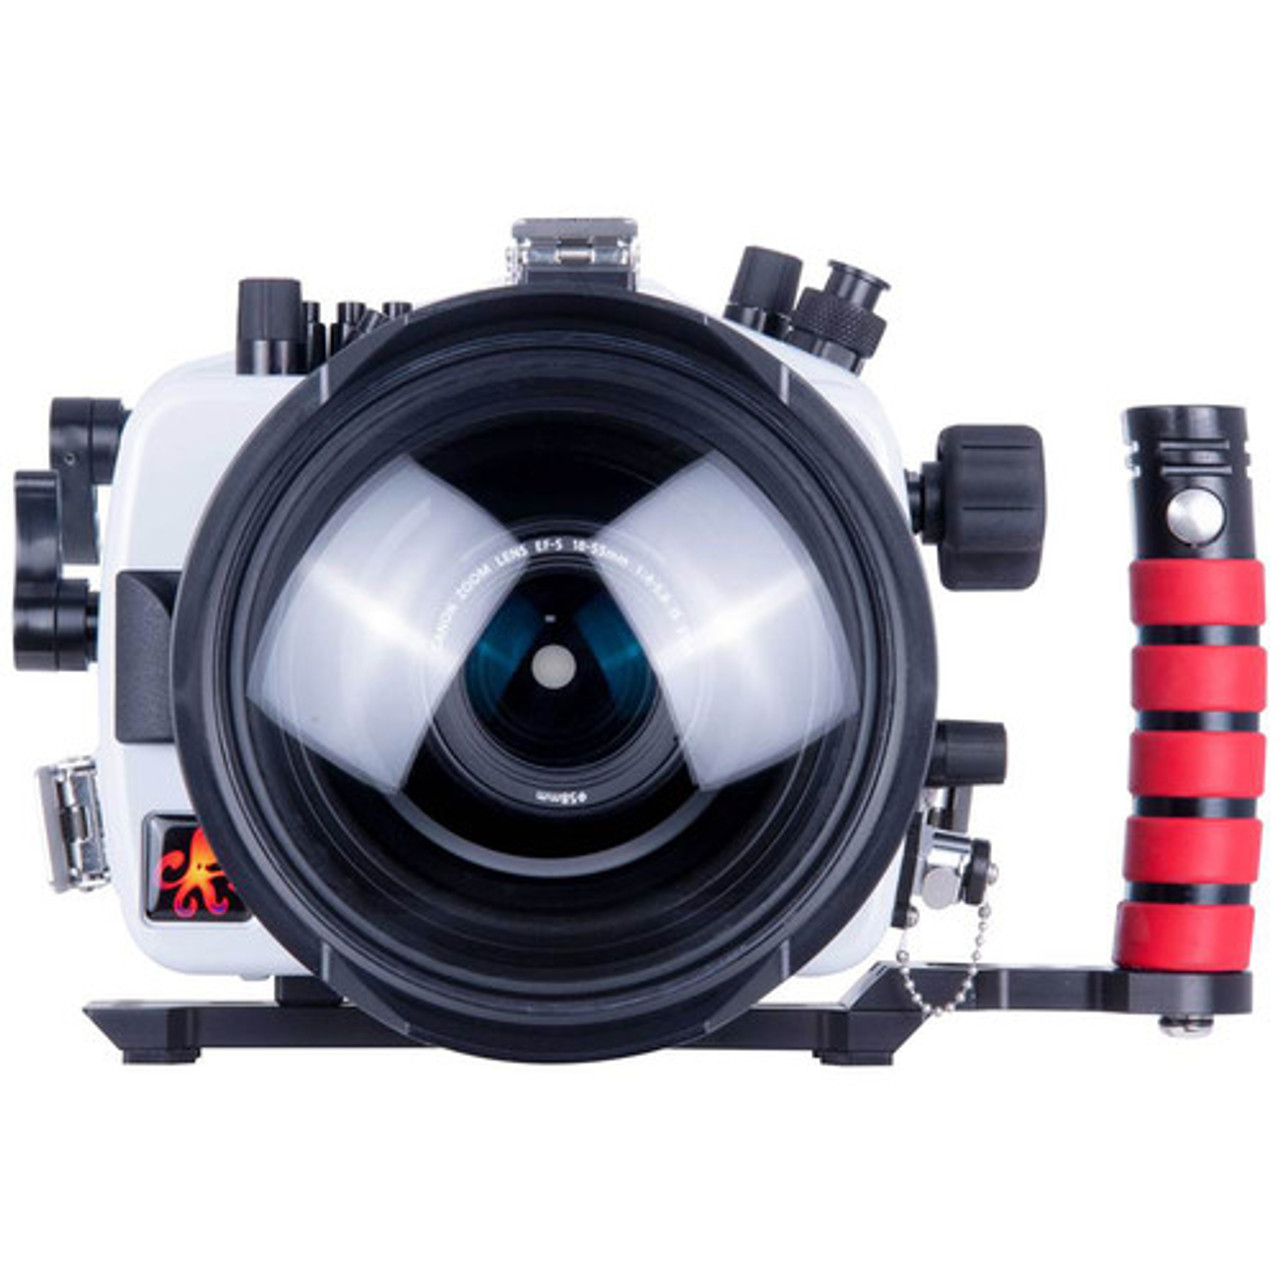 Canon EOS 90D DSLR Camera, DSLR Camera